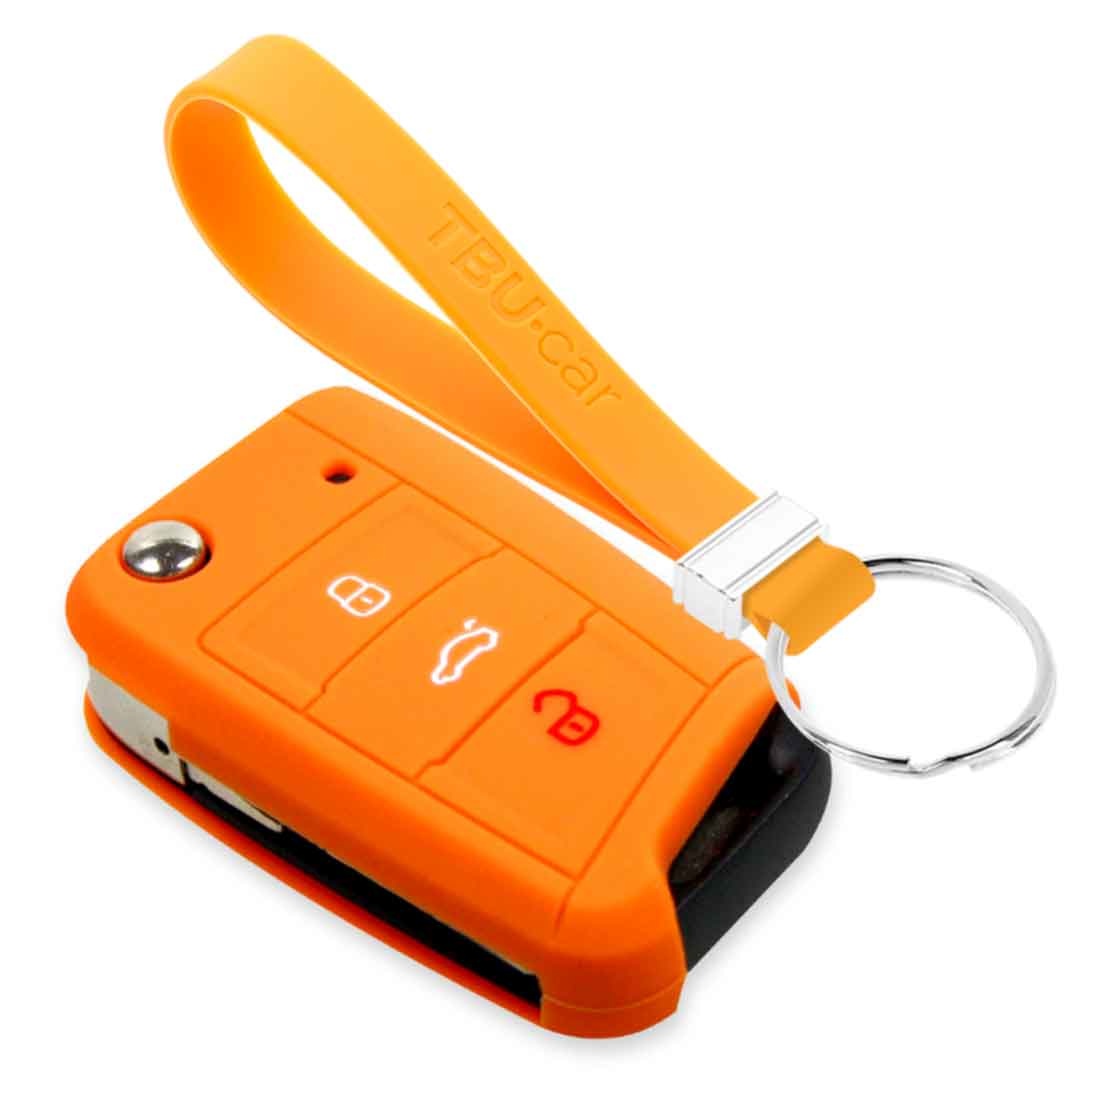 TBU car TBU car Autoschlüssel Hülle kompatibel mit Skoda 3 Tasten - Schutzhülle aus Silikon - Auto Schlüsselhülle Cover in Orange